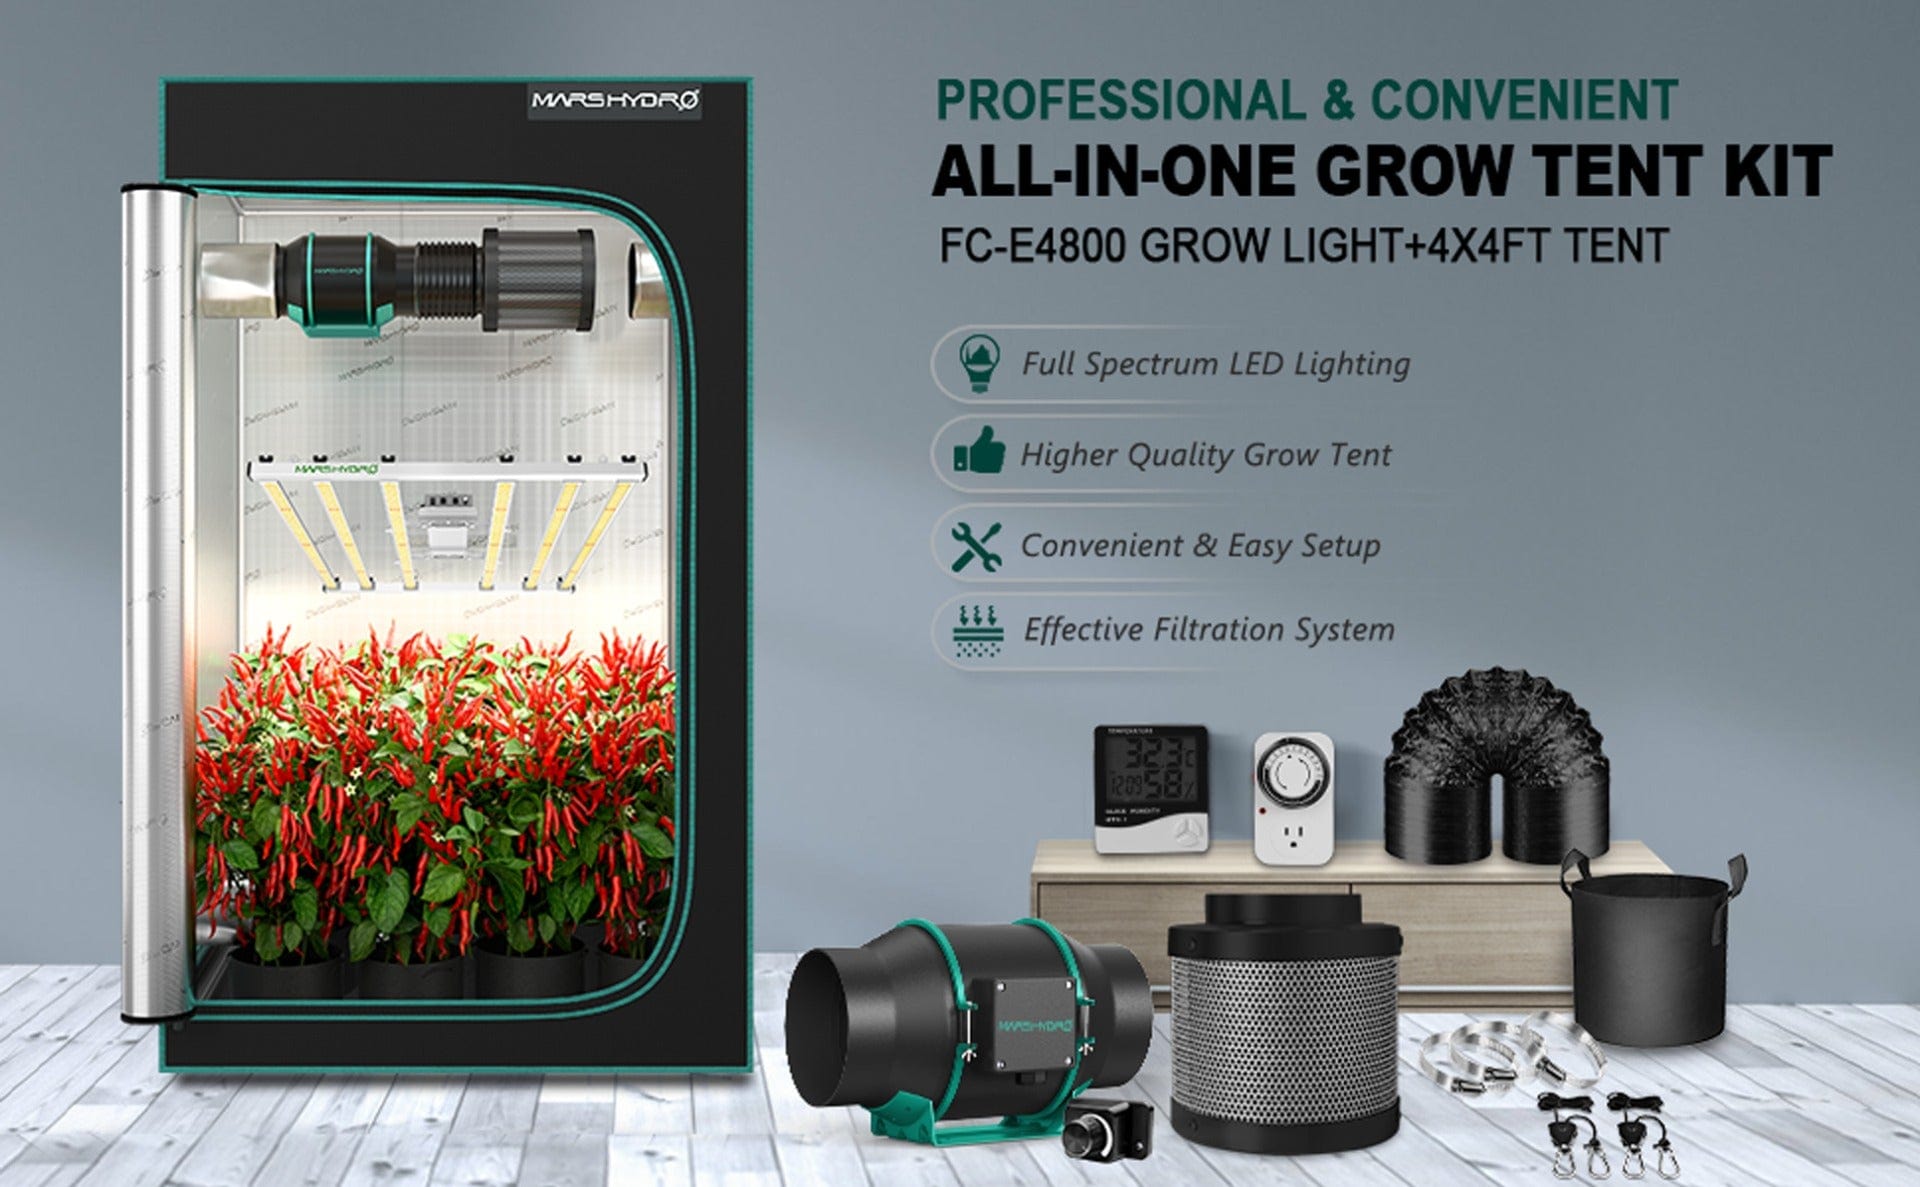 AC Infinity Advance Grow Tent System 4x4, 4-Plant Kit, Full Spectrum LED Grow Light